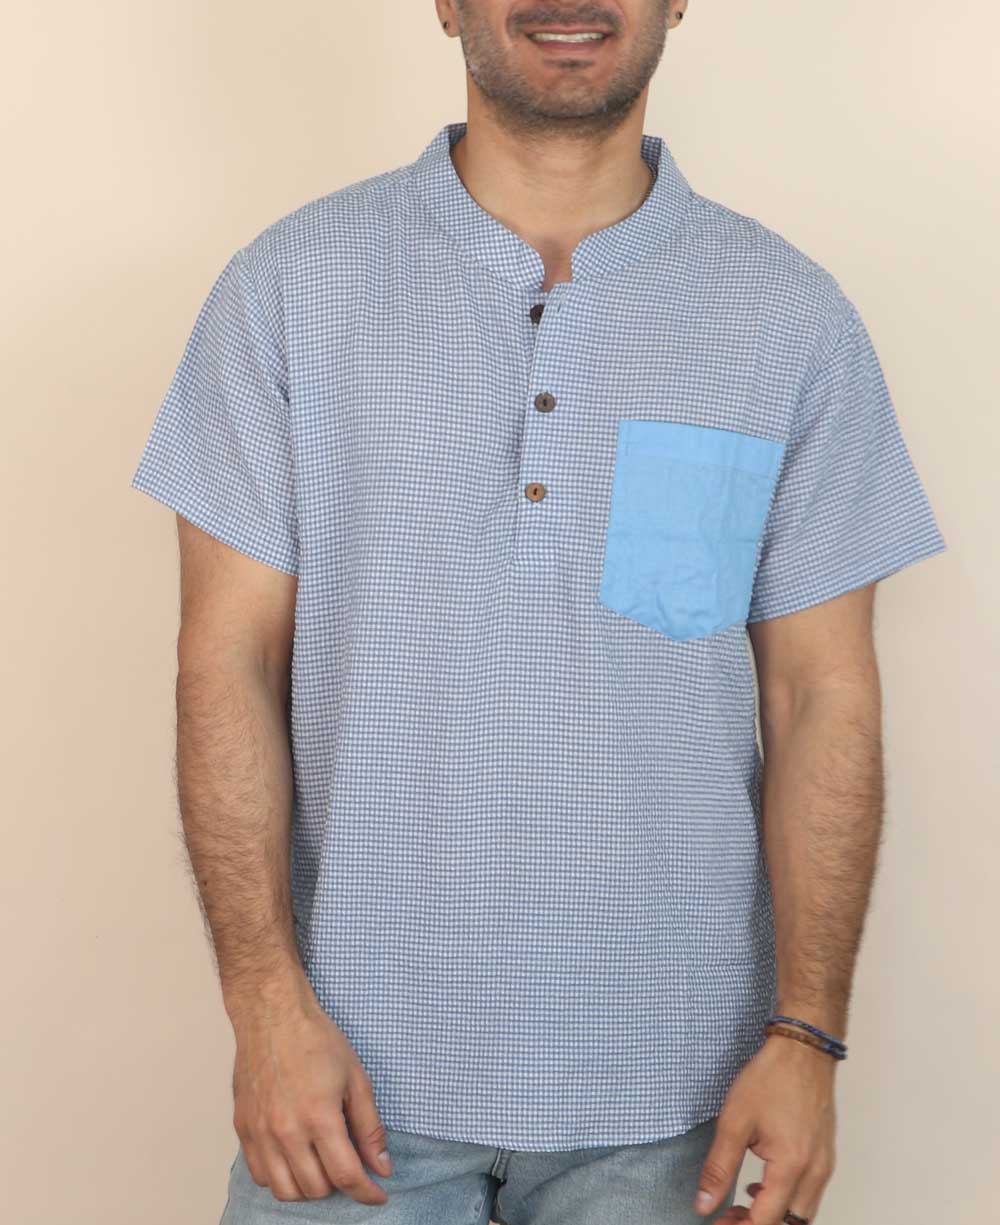 Men's Button Up Kurta Shirt With Solid Pocket - Shirts & Tops Blue M